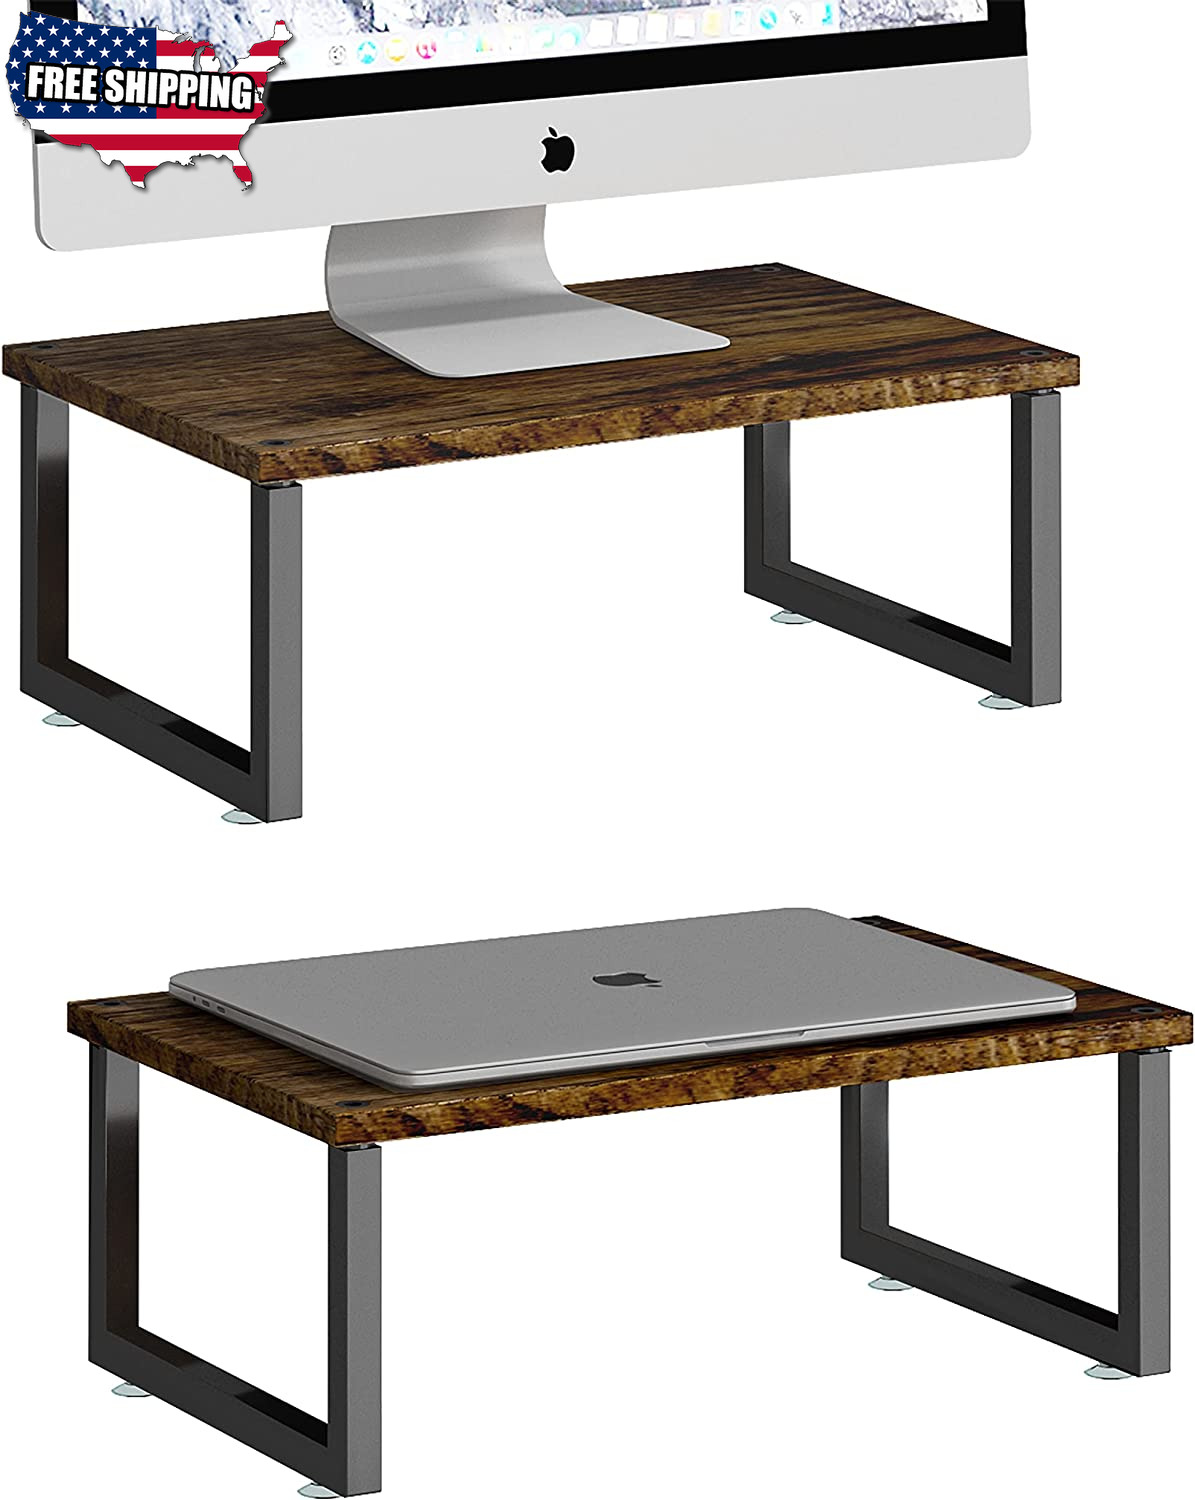 2PCS Wood Monitor Stand Riser  Desktop Organizer Shelf for Laptop Computer iMac